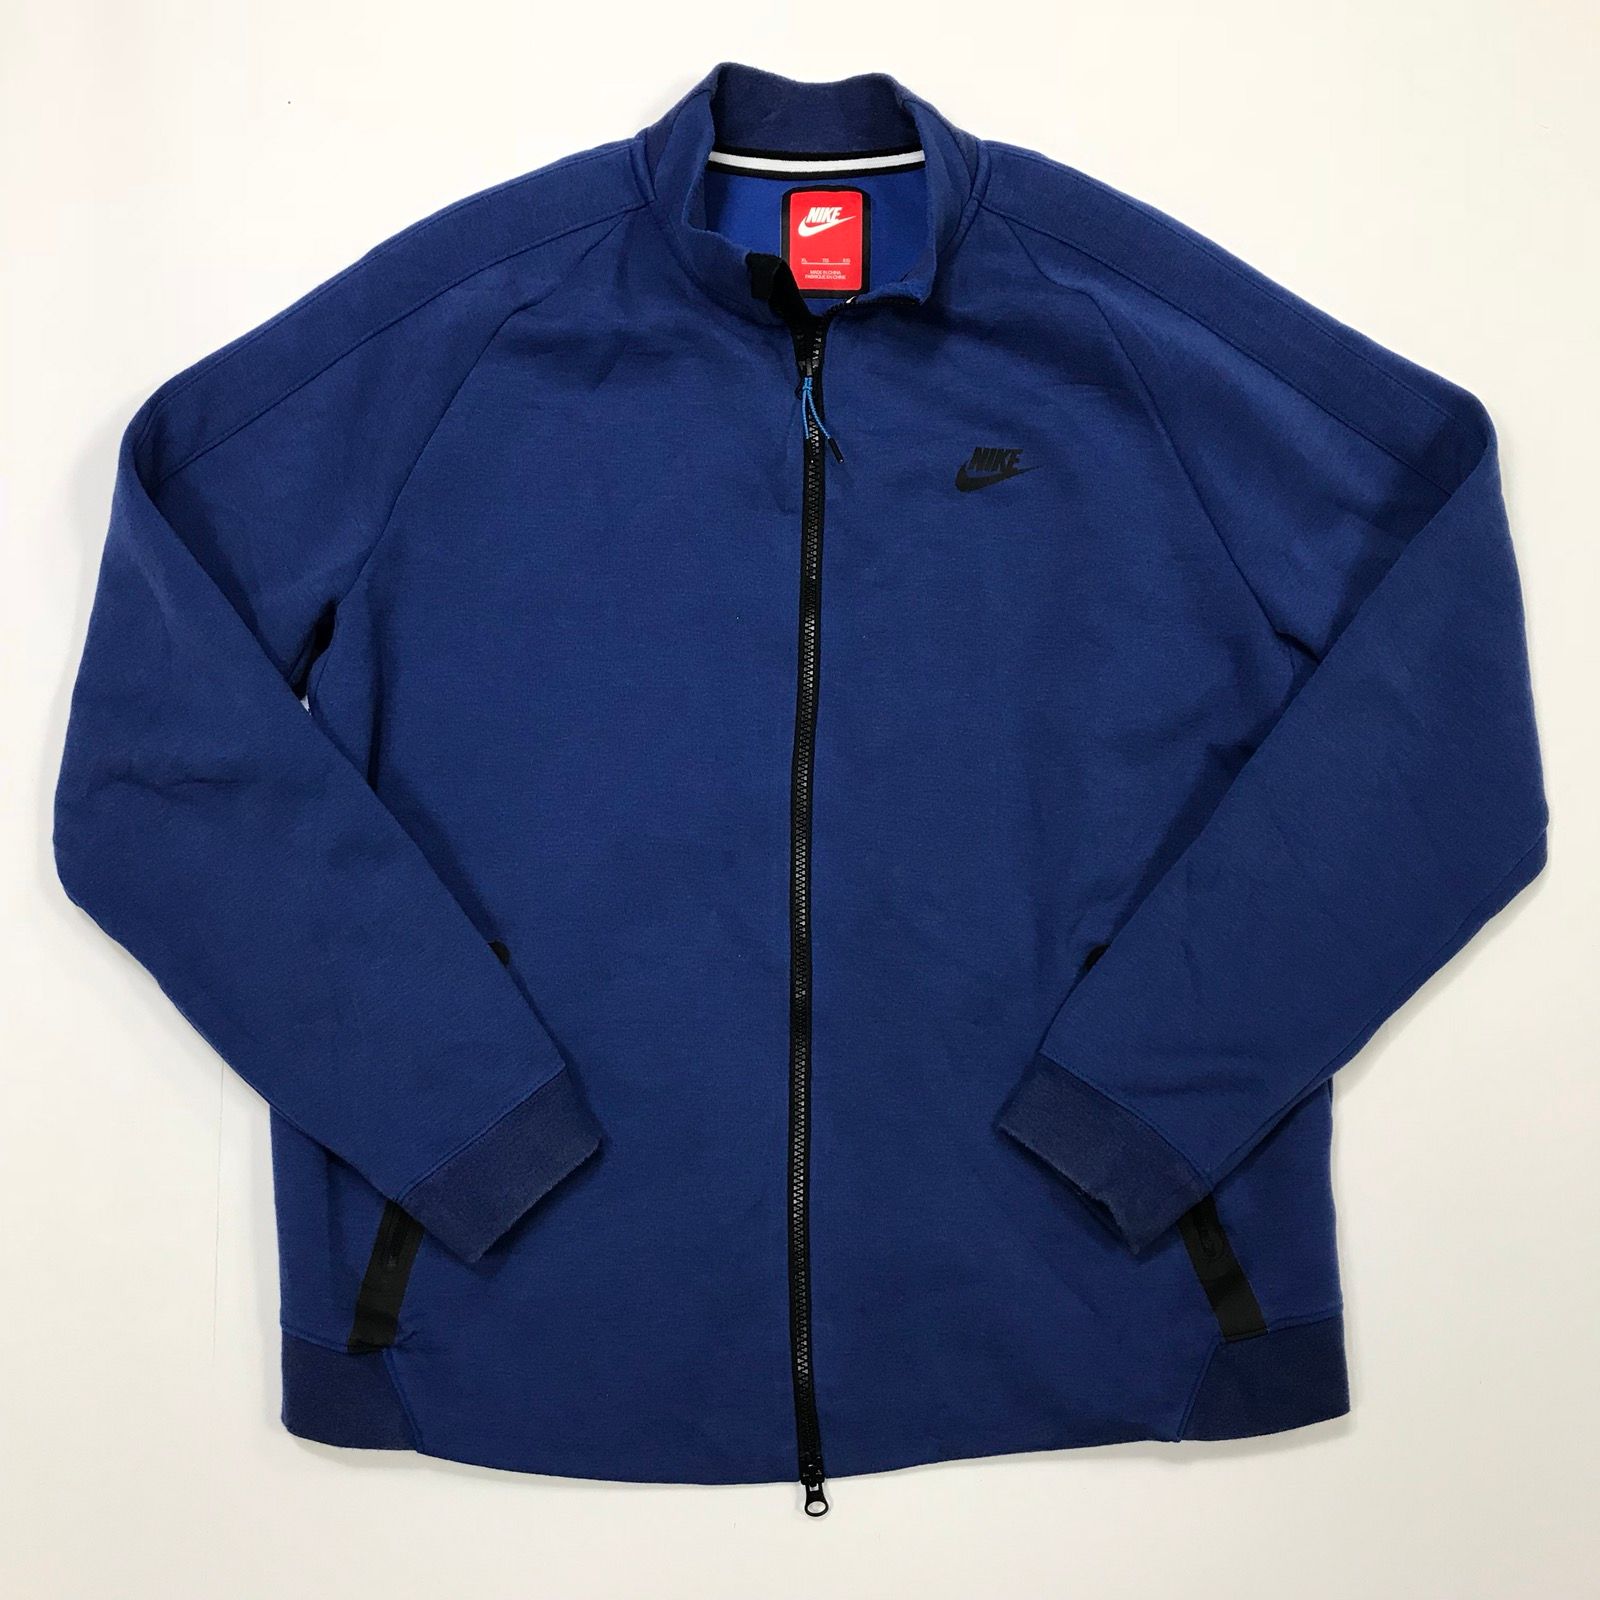 Nike Nike Tech Fleece Sweatshirt Full Zip Blue Black Acg Vtg 90s Size US L / EU 52-54 / 3 - 1 Preview